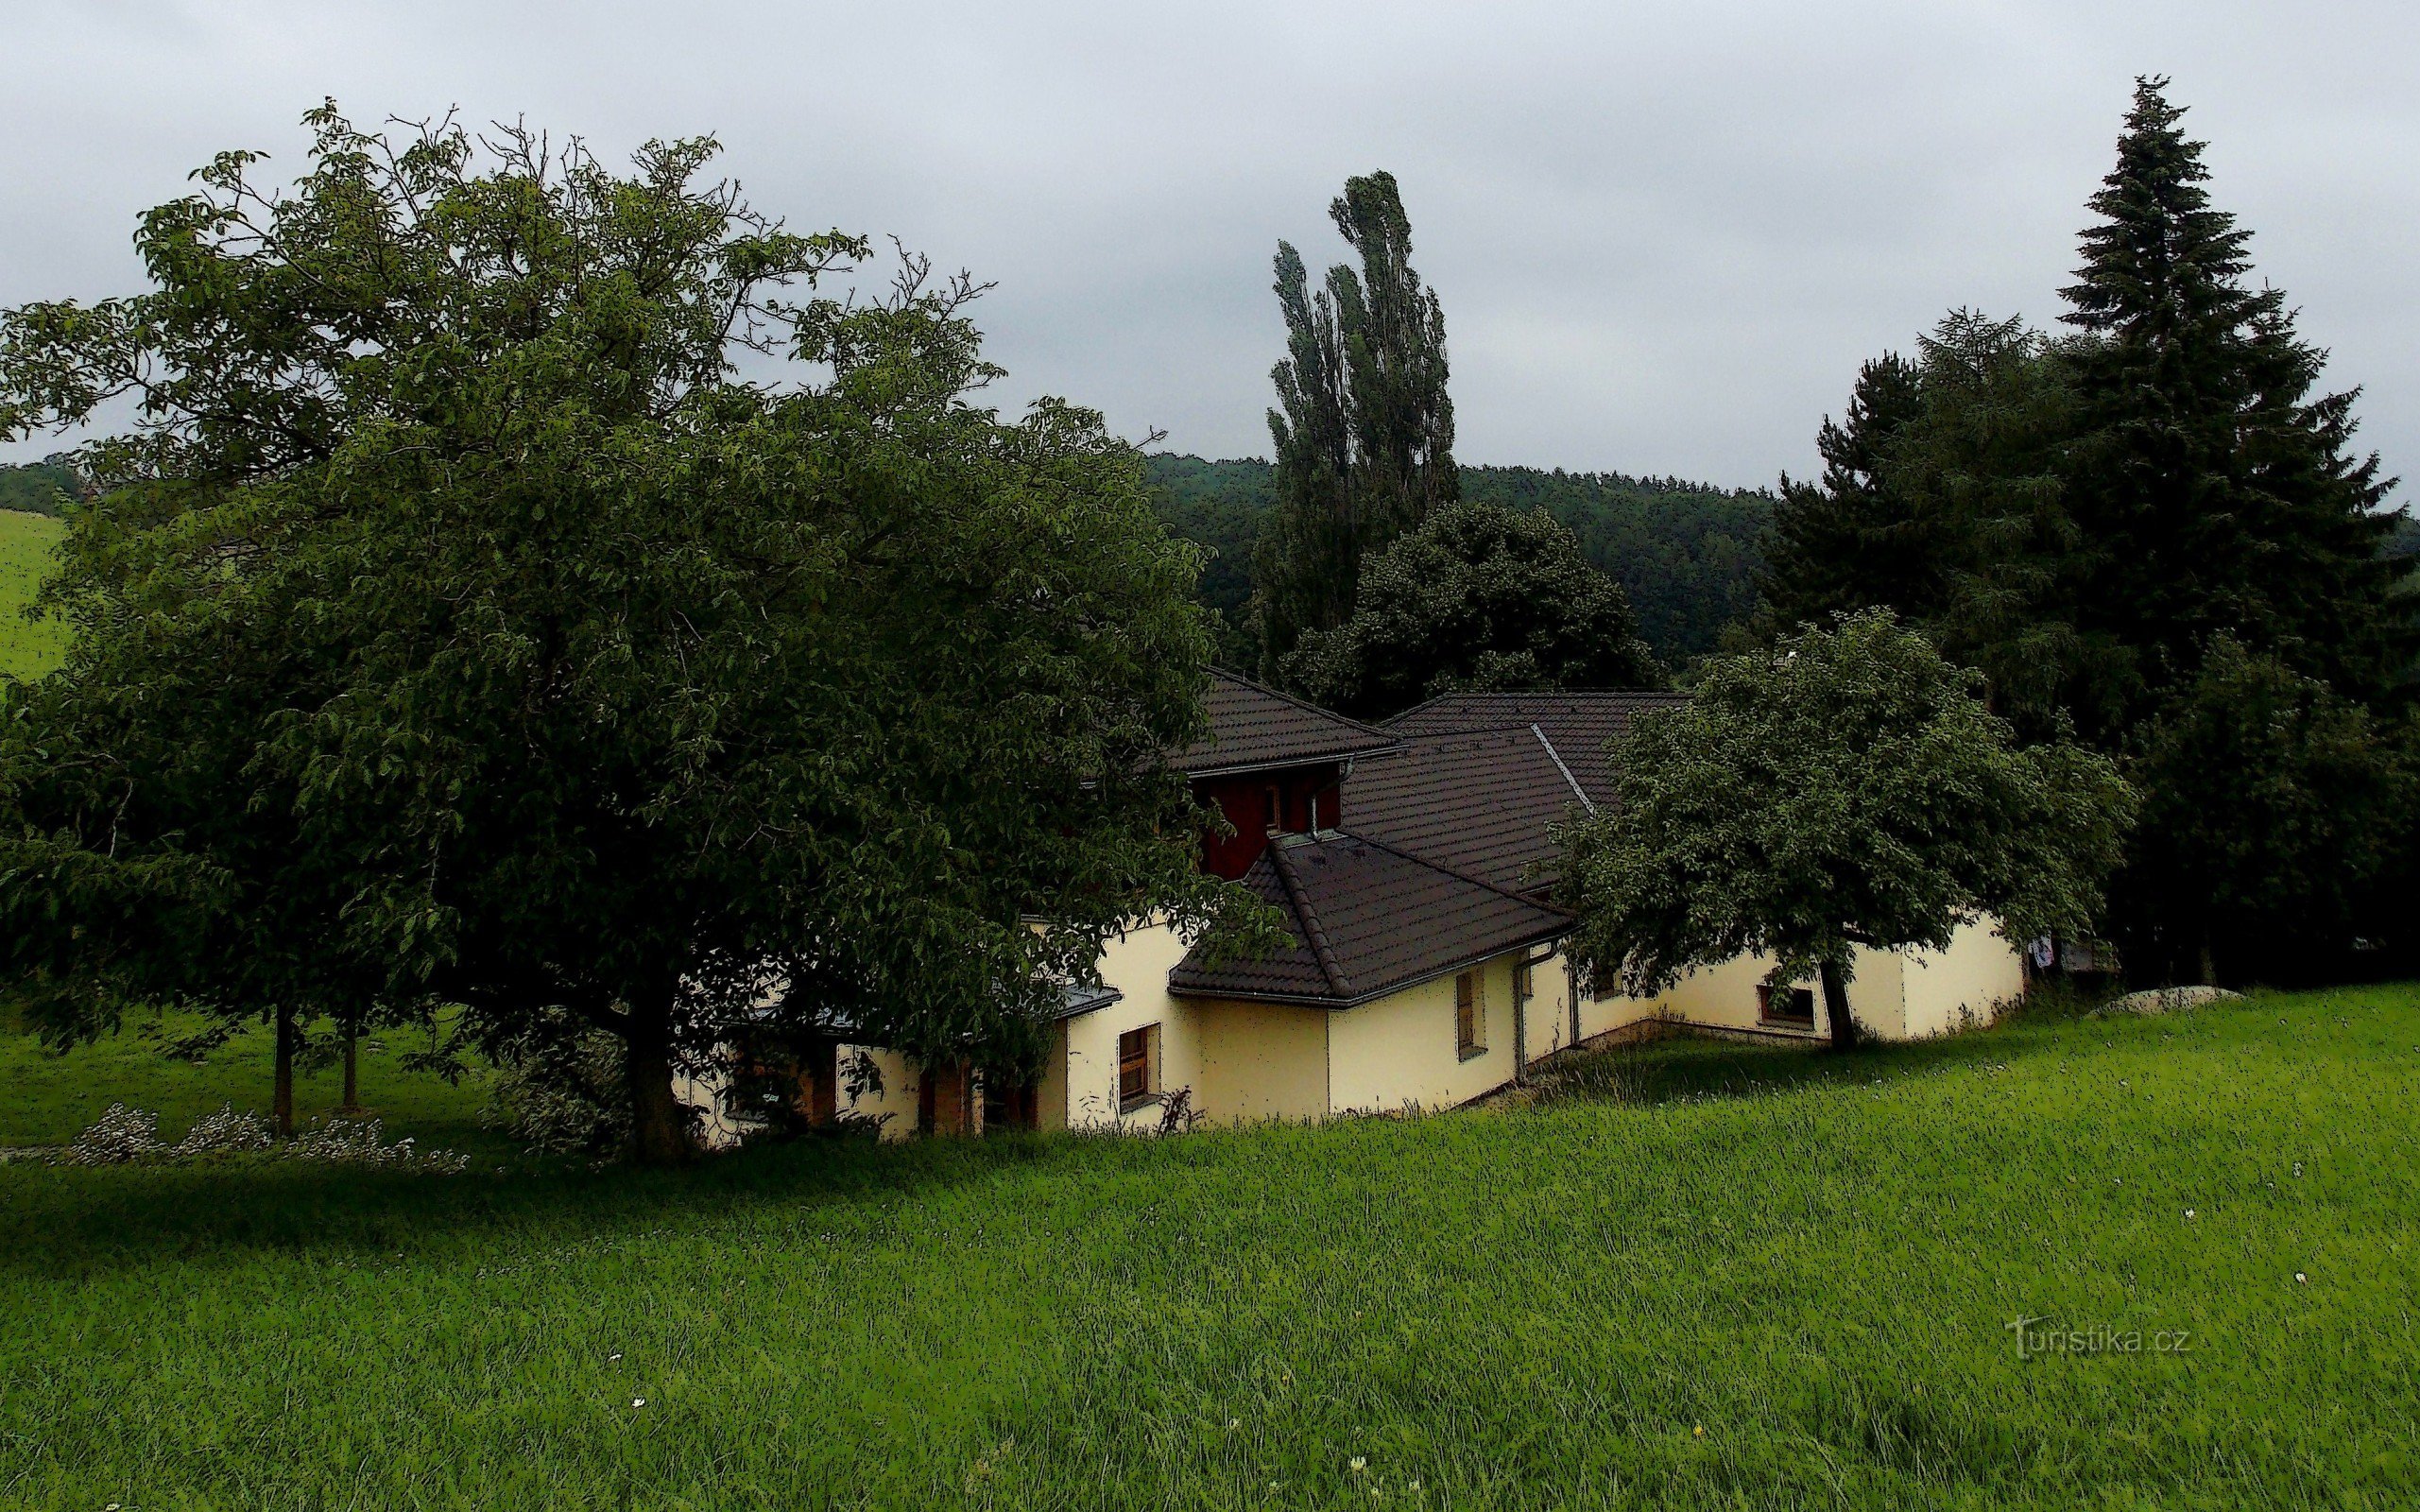 A summer walk around Zlín through the Želechovice glades